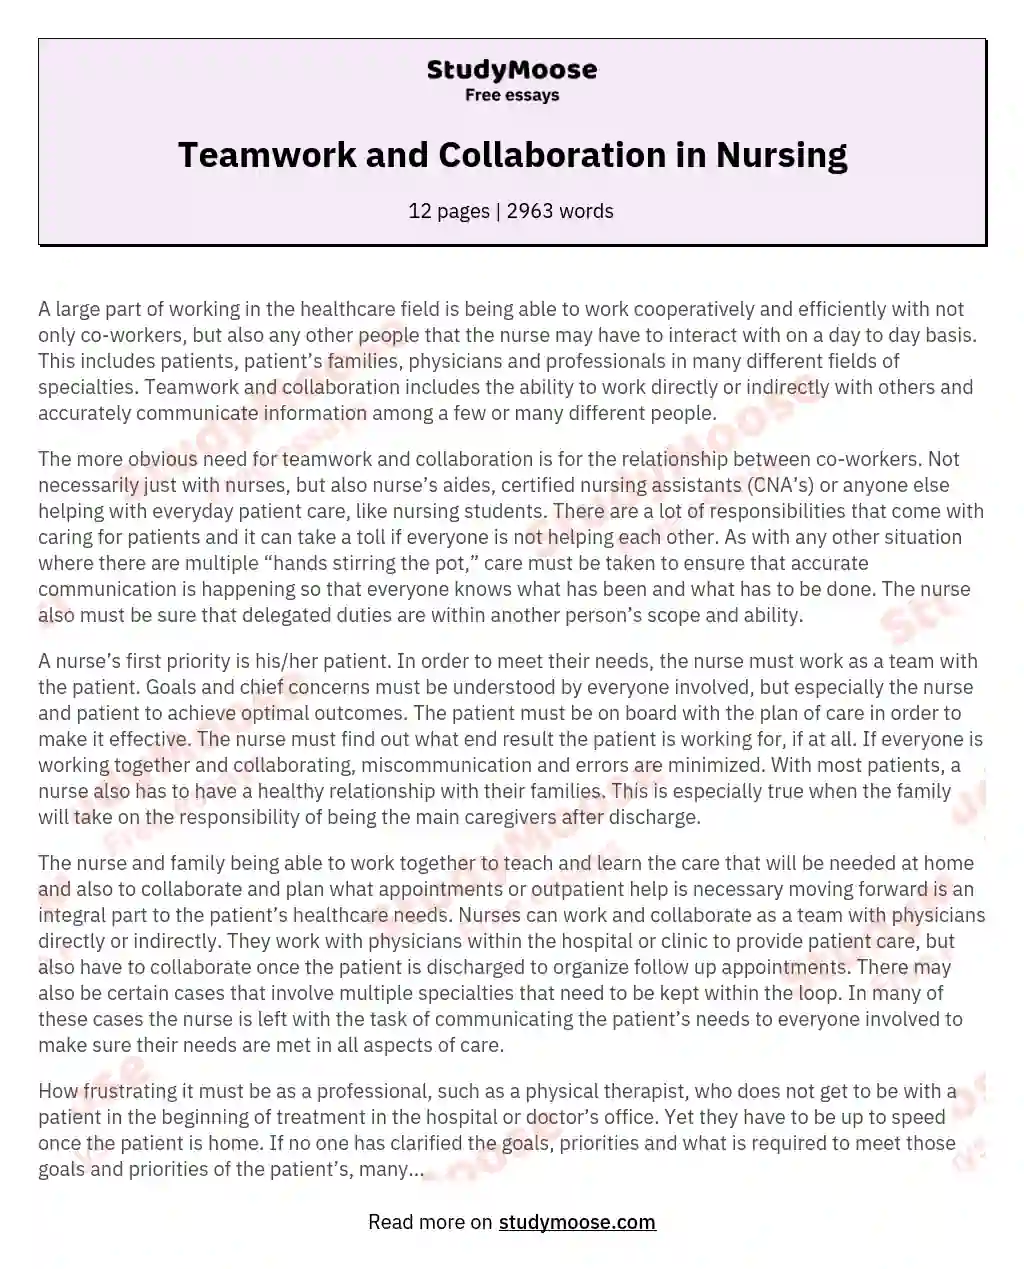 Teamwork and Collaboration in Nursing essay